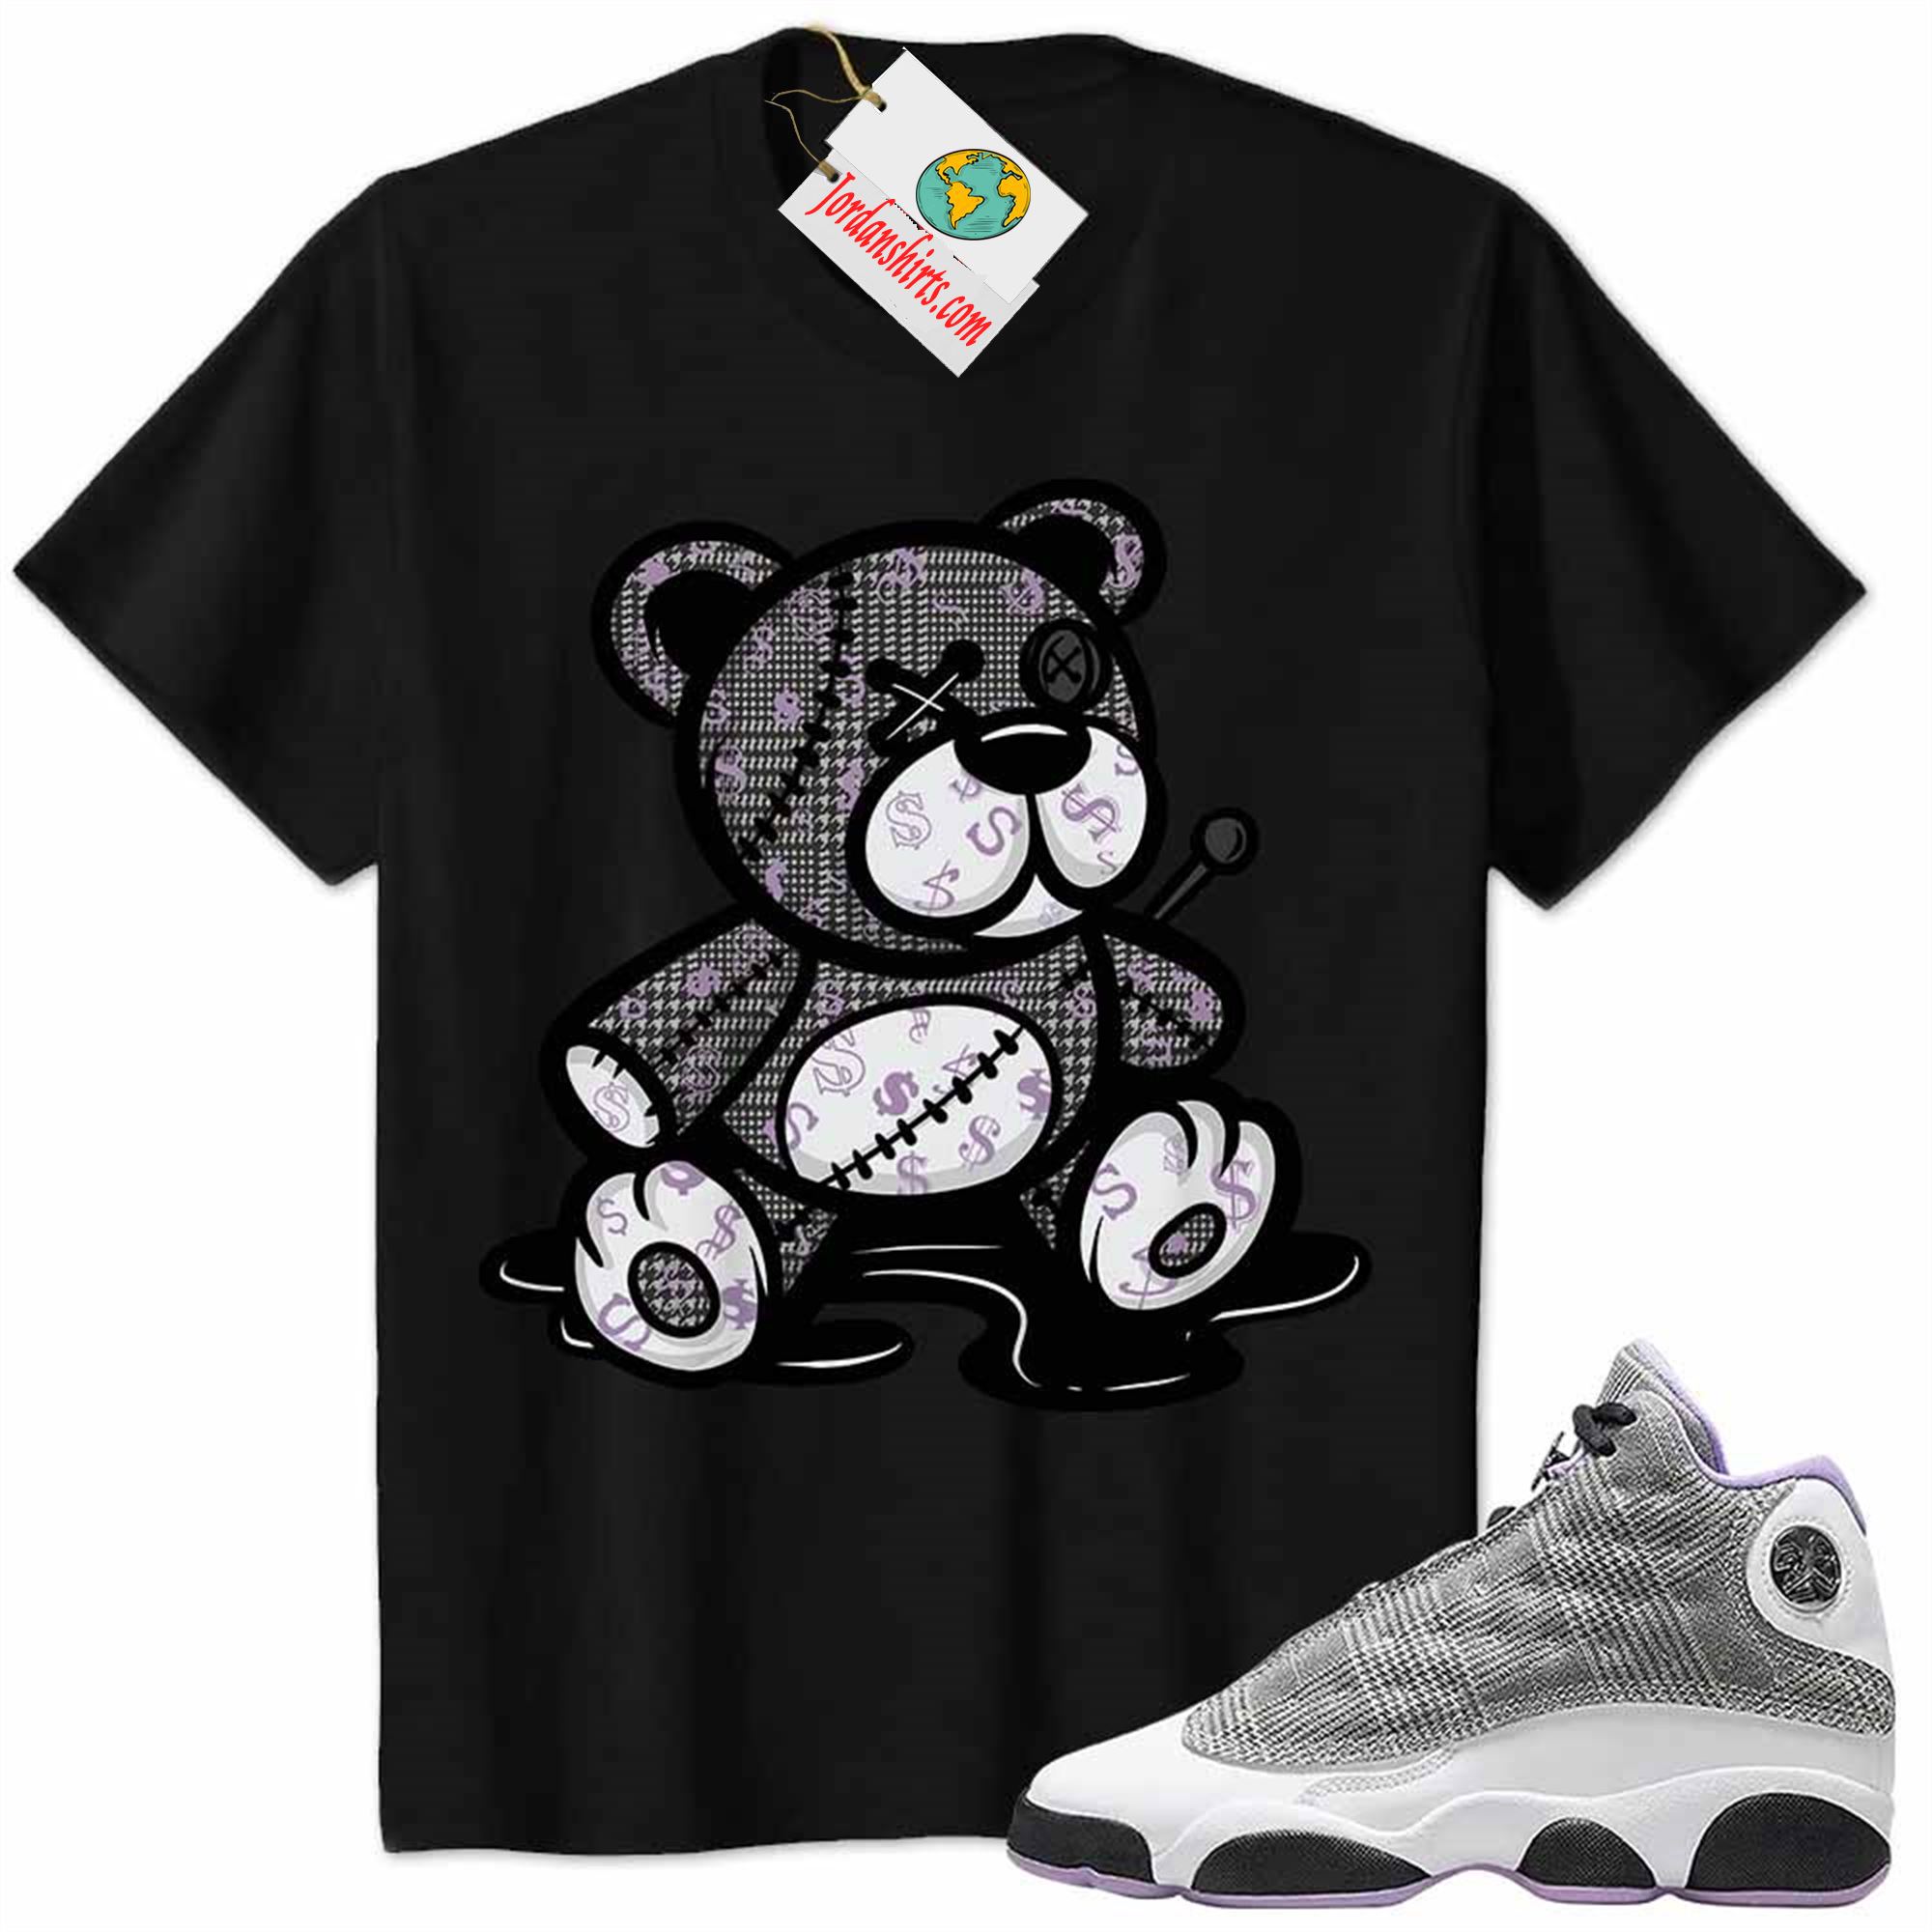 Jordan 13 Shirt, Jordan 13 Houndstooth Shirt Teddy Bear All Money In Black Plus Size Up To 5xl